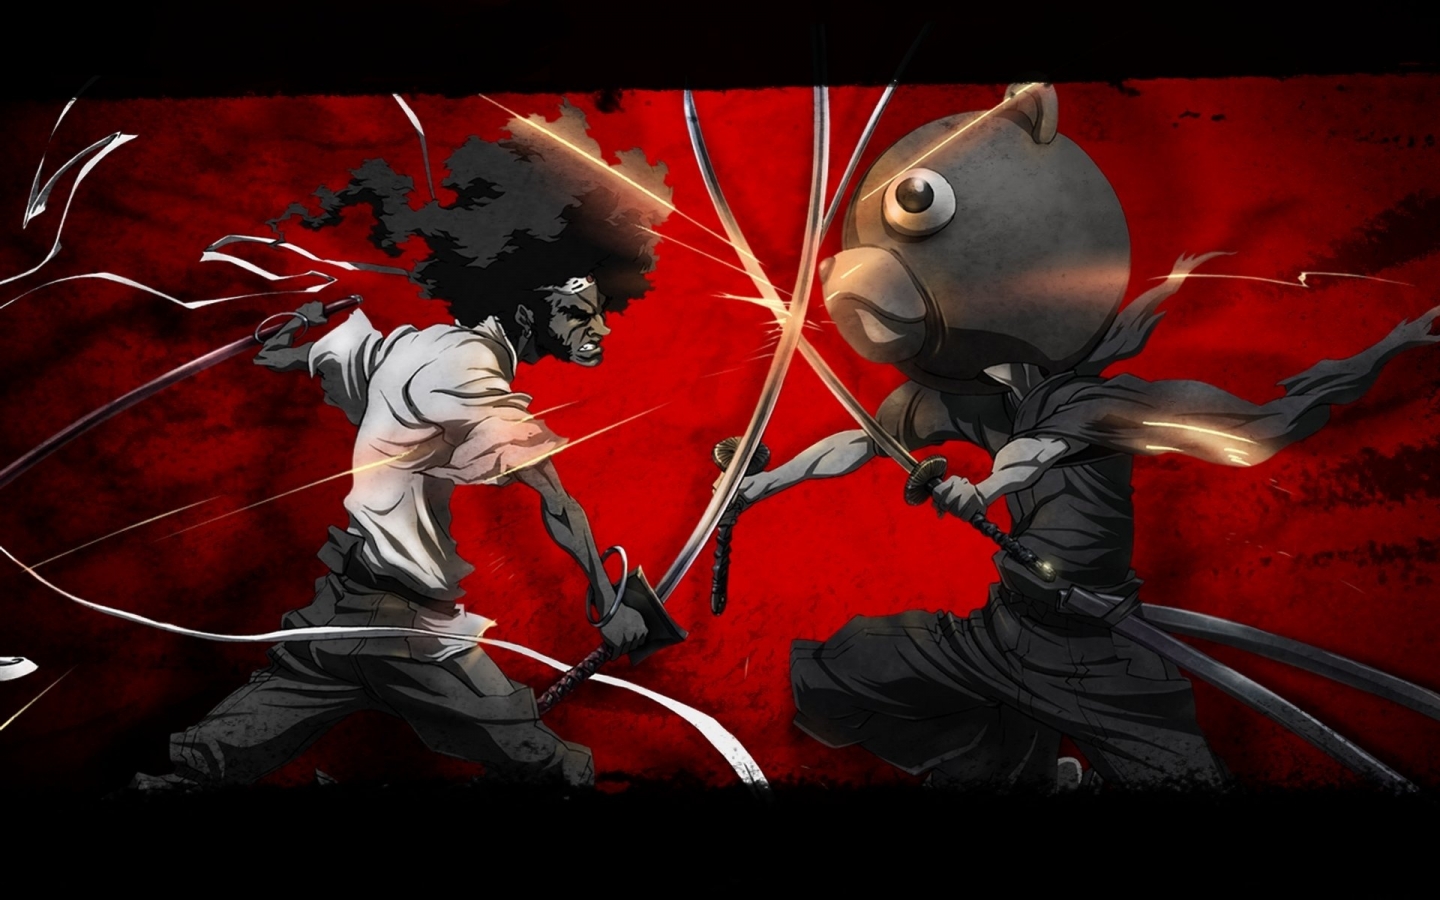 Afro Samurai vs Kuma for 1440 x 900 widescreen resolution